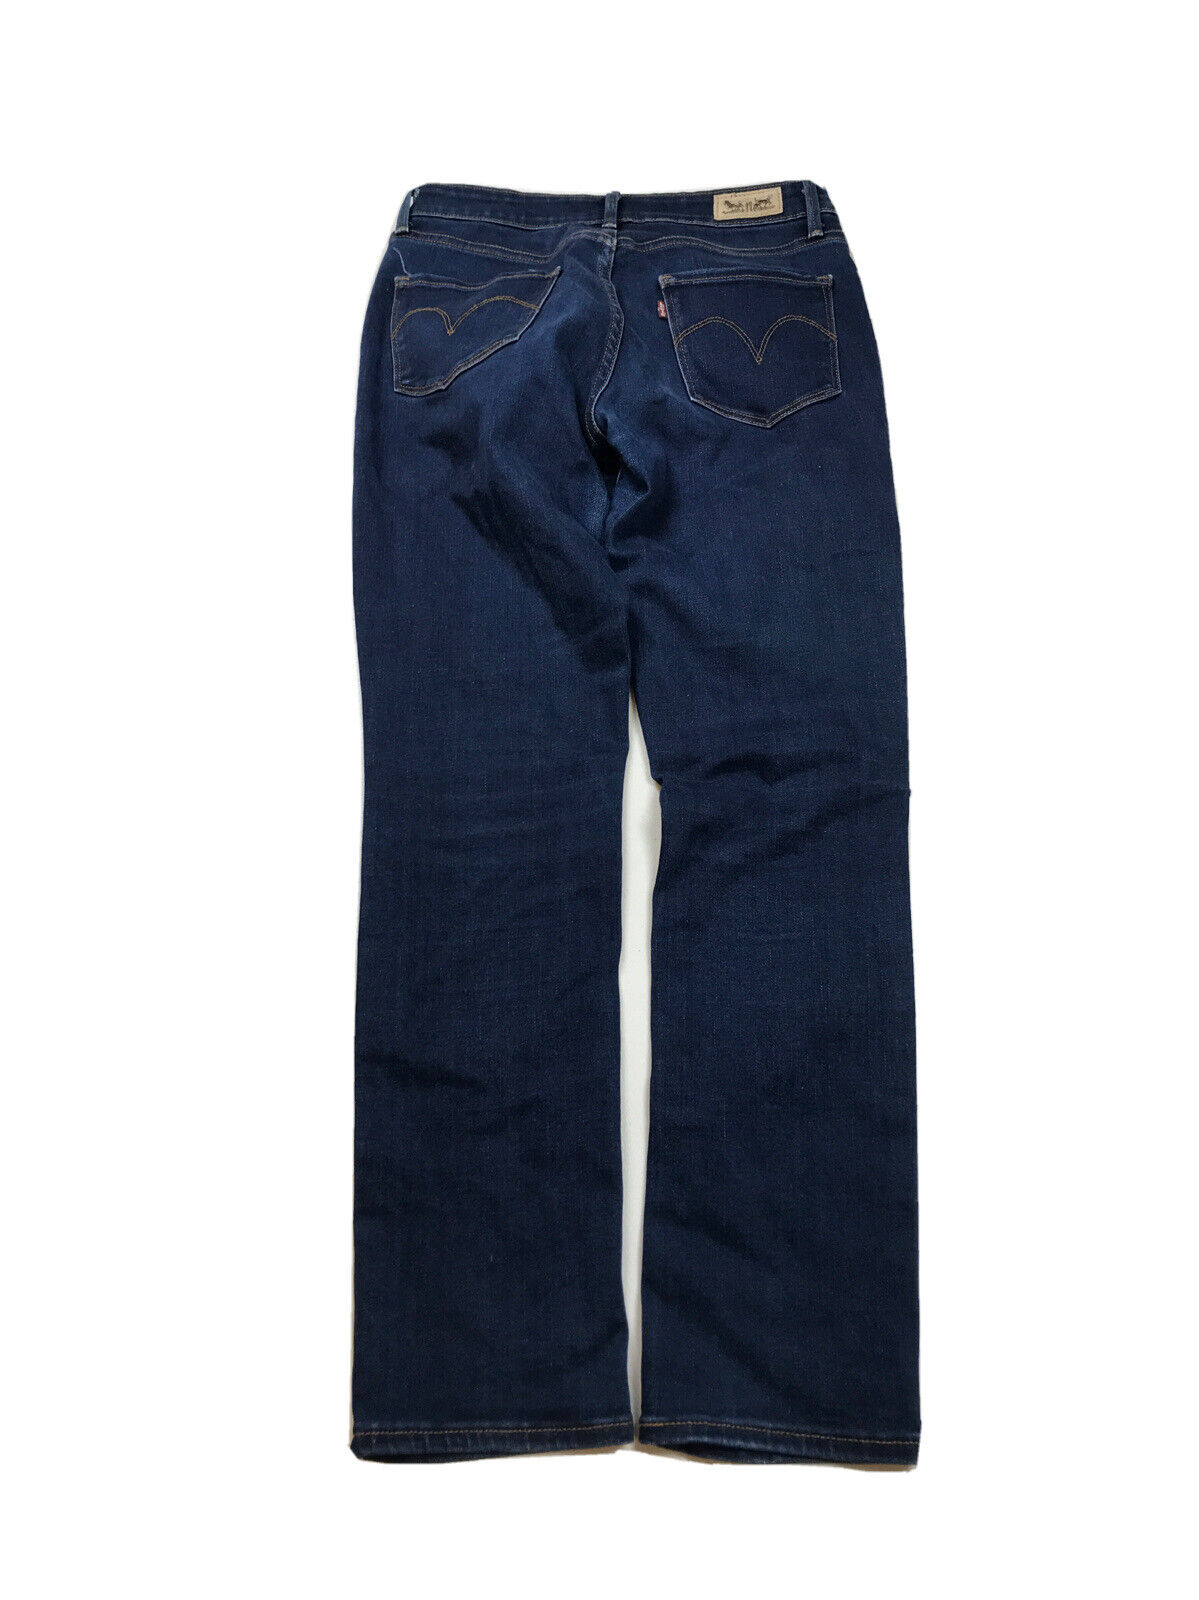 Levi's Women's Dark Wash Stretch Blue Denim Mid Rise Skinny Jeans - 4